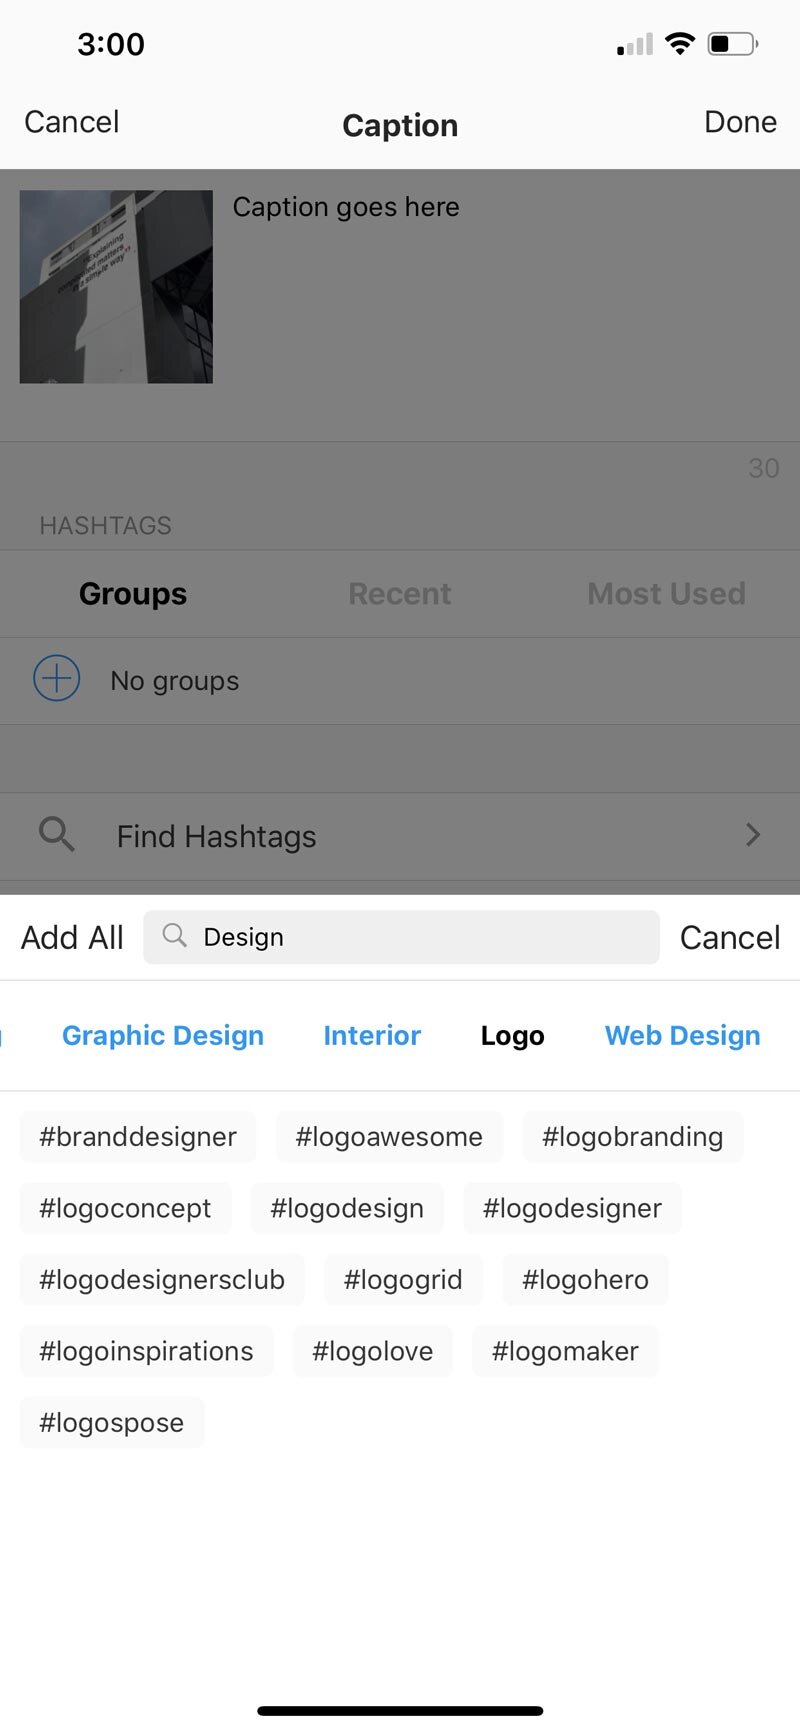 Preview App for Instagram Design